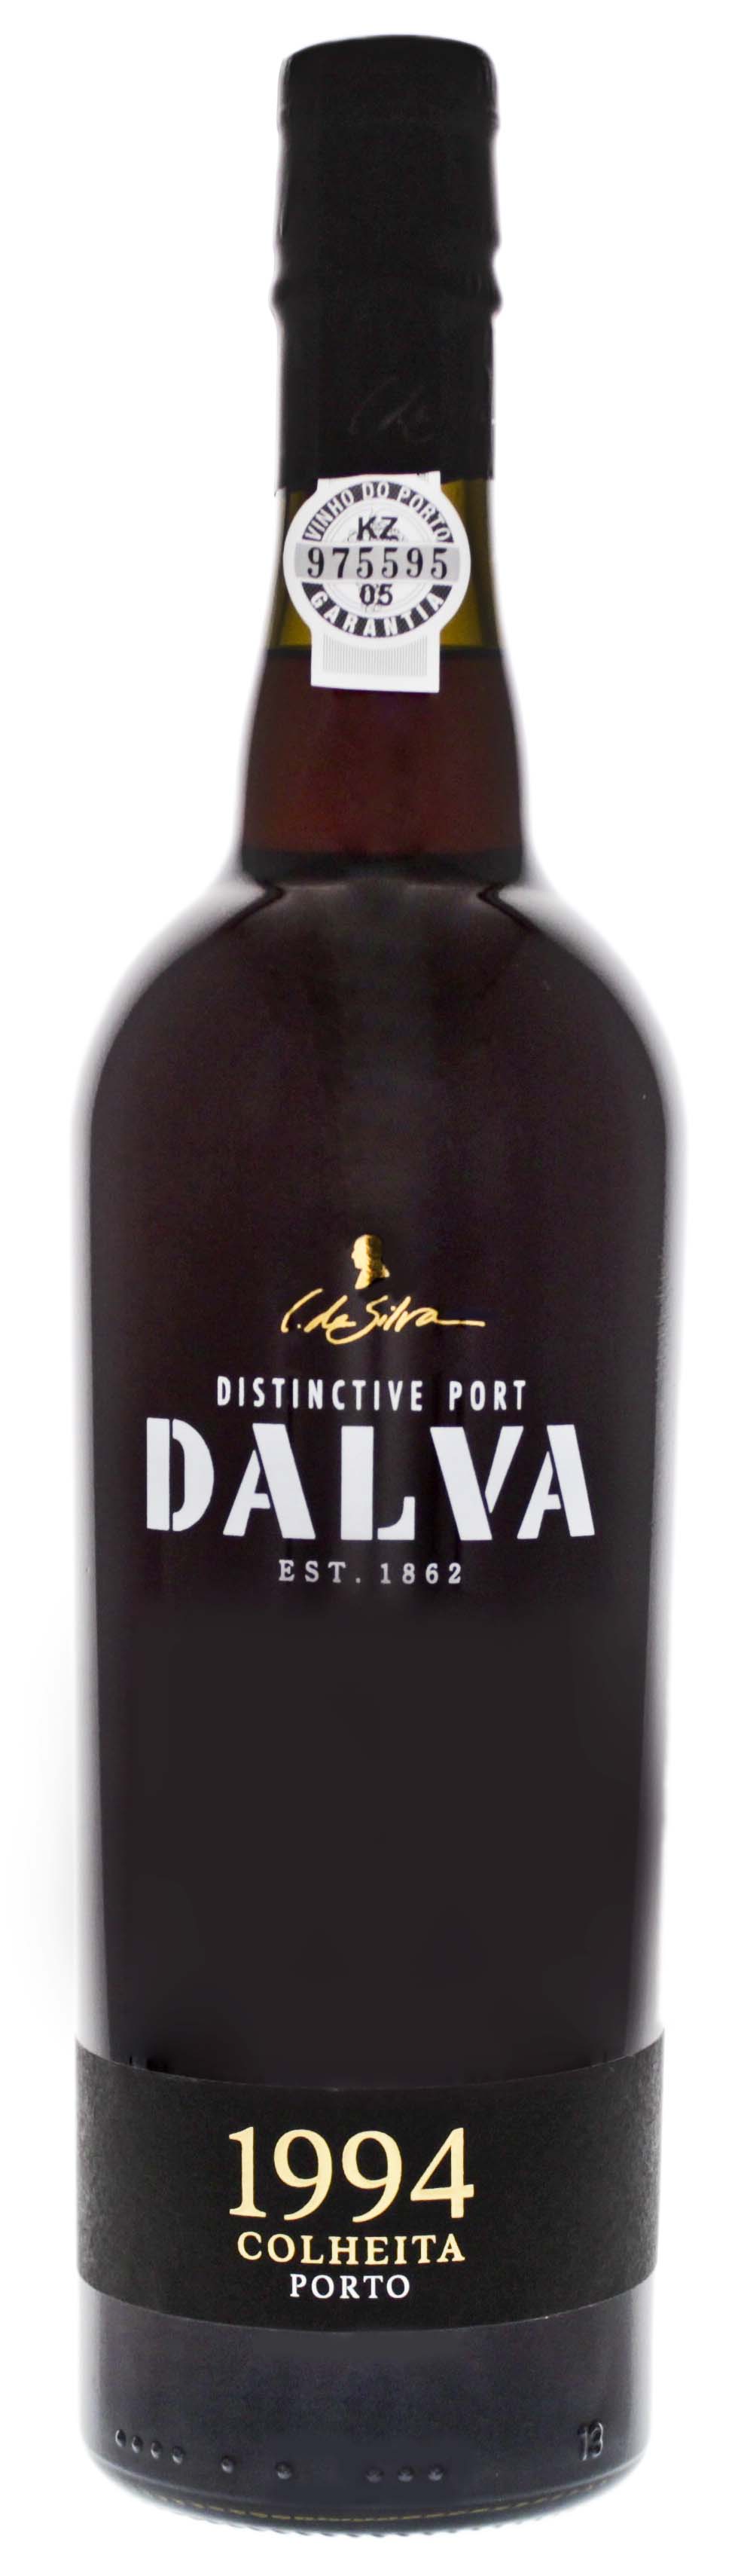 Dalva Colheita Port 1994 0,75L